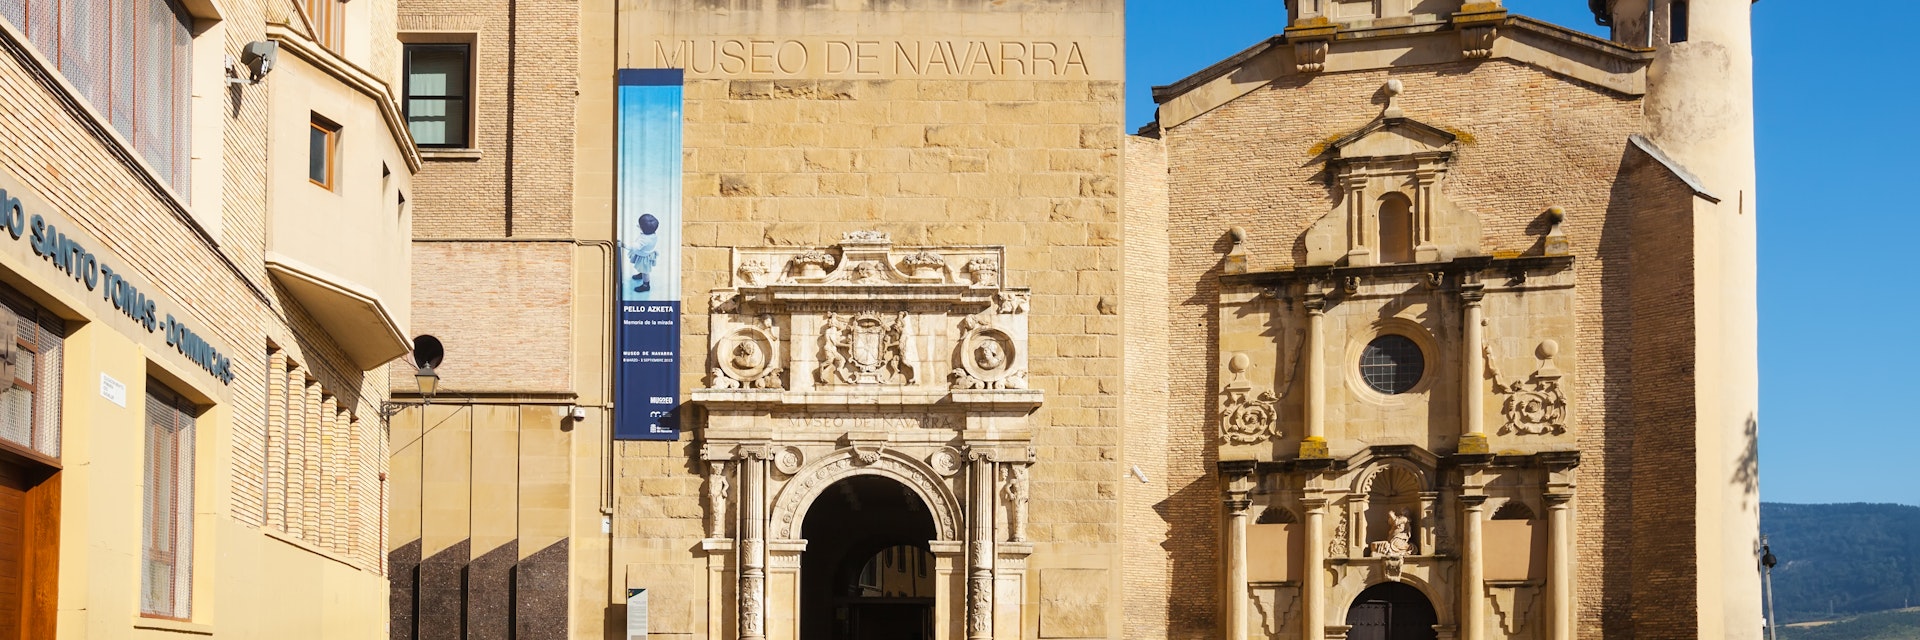 Museum of Navarre in Pamplona.